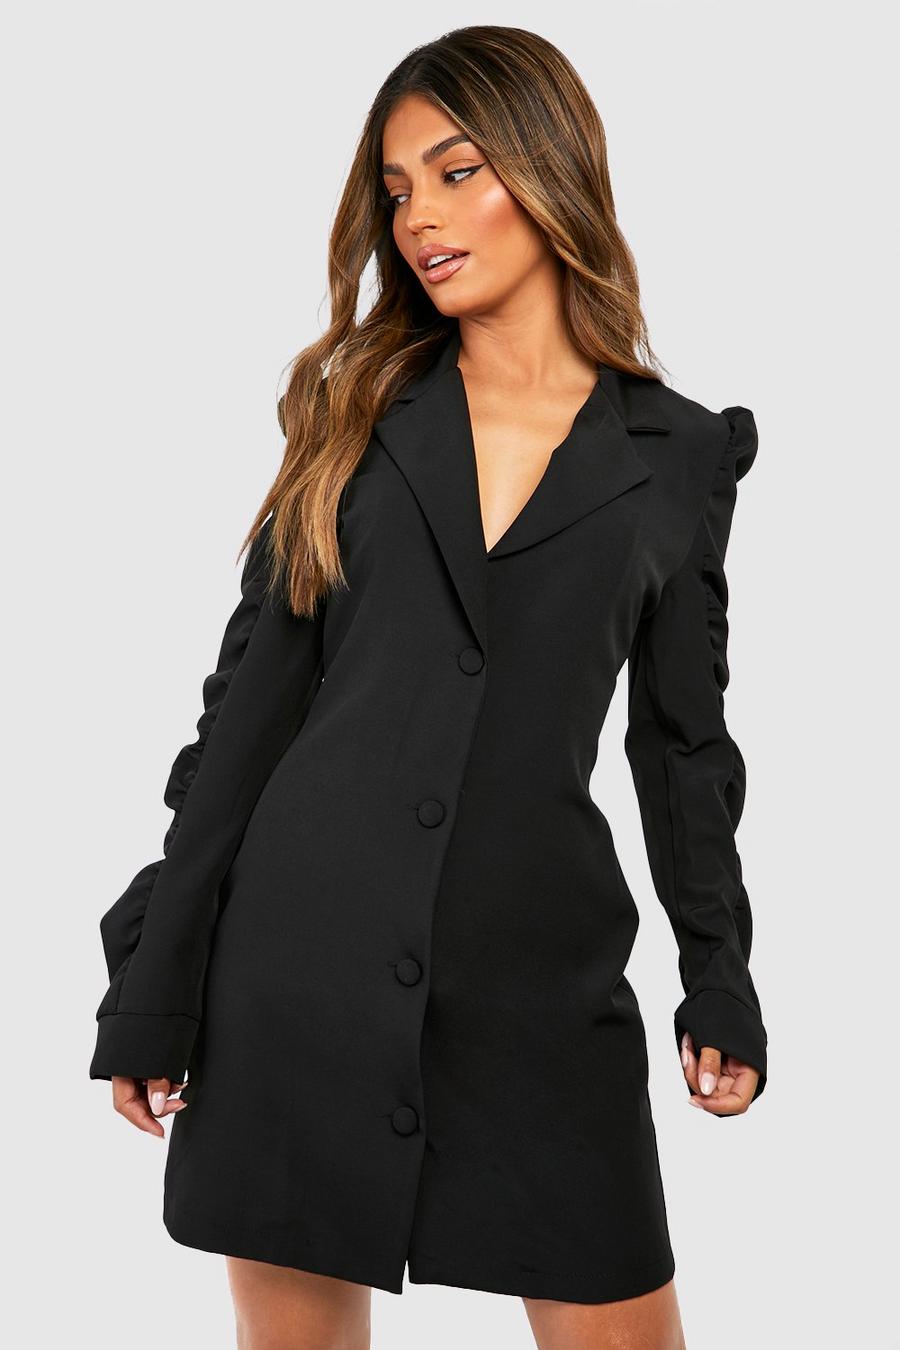 Black nero Ruched Sleeve Tailored Blazer Dress